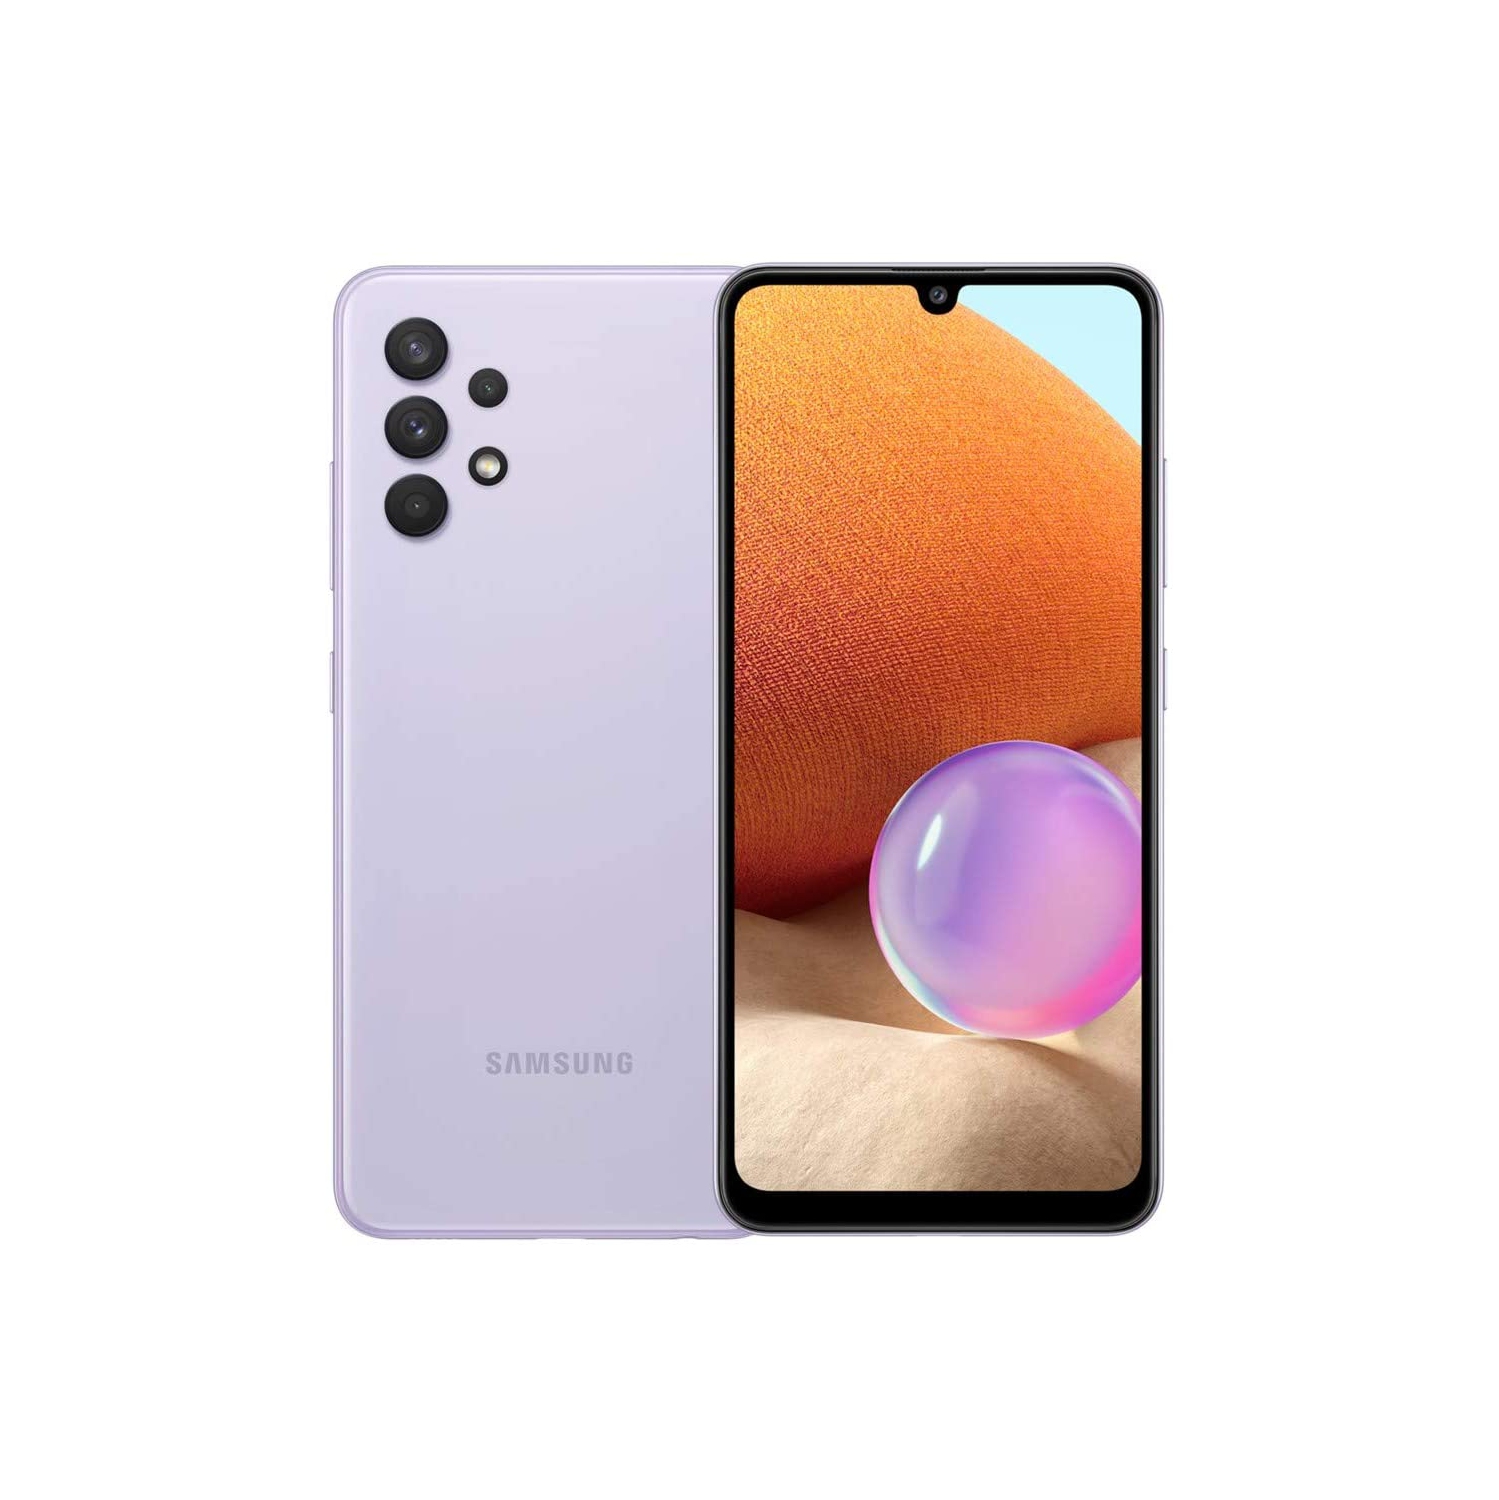 Samsung Galaxy A32 (128GB, 4GB) 6.4" (SM-A325M/DS) - Dual Sim - Factory Unlocked Smartphone - Awesome Violet - Brand New - Unlocked